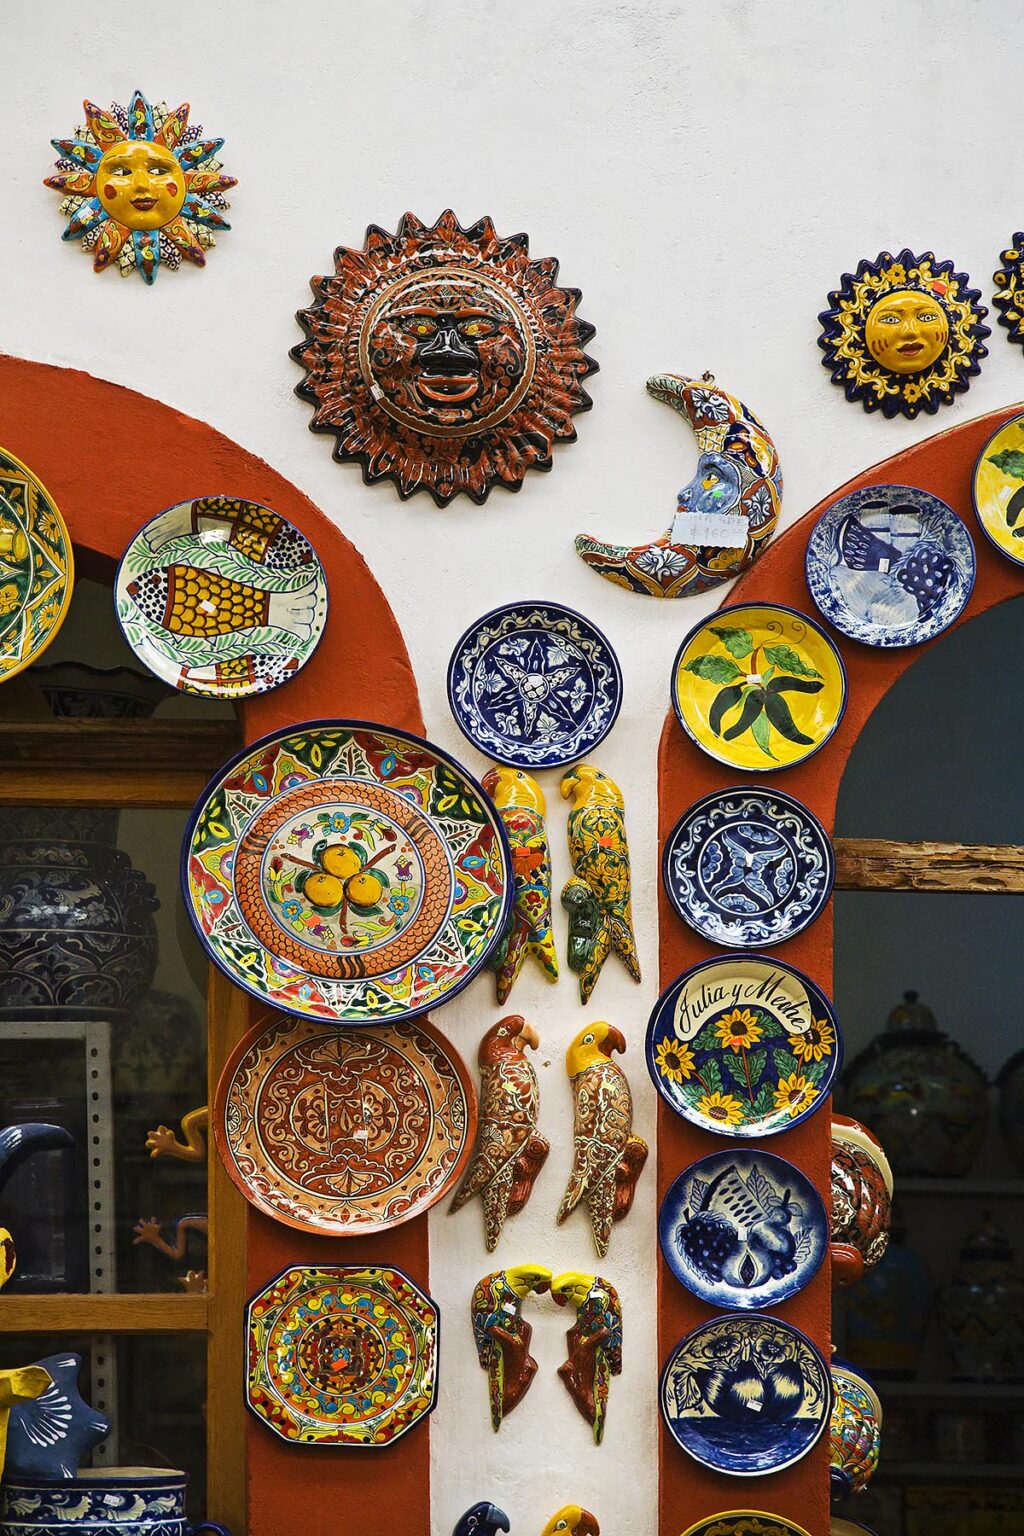 TALEVERA pottery including decorative plates, suns and birds hang in a DOLORES HIDALGO shop - GUANAJUATO, MEXICO